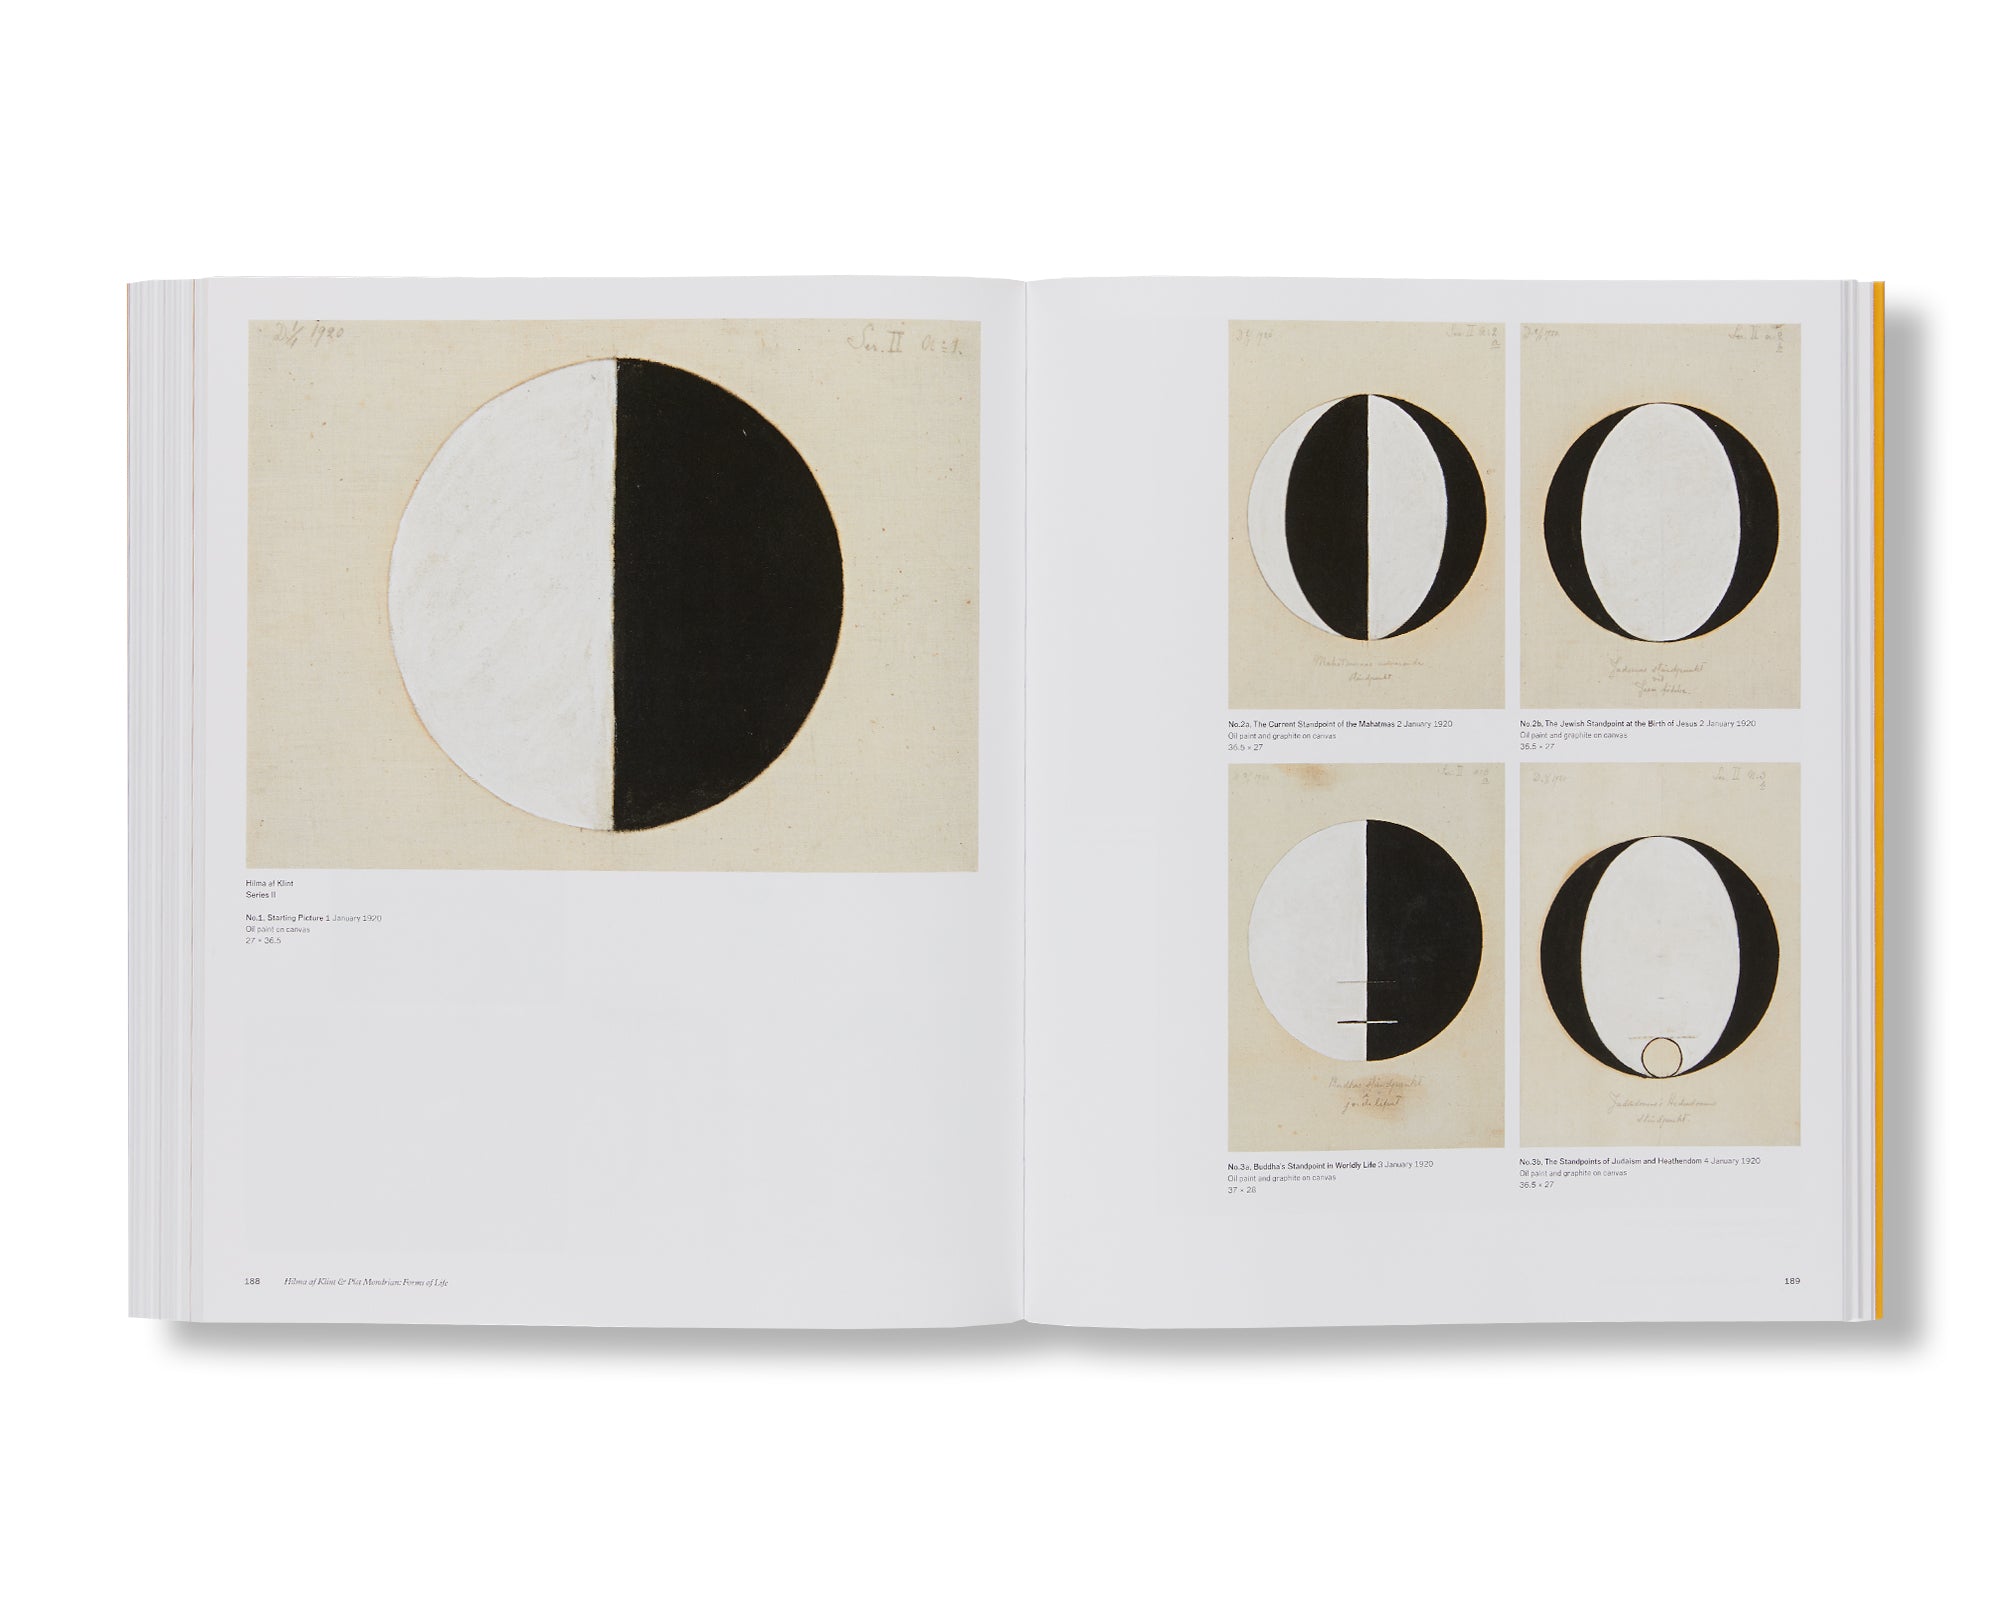 HILMA AF KLINT AND PIET MONDRIAN: FORMS OF LIFE by Hilma af Klint, Piet Mondrian [SOFTCOVER]